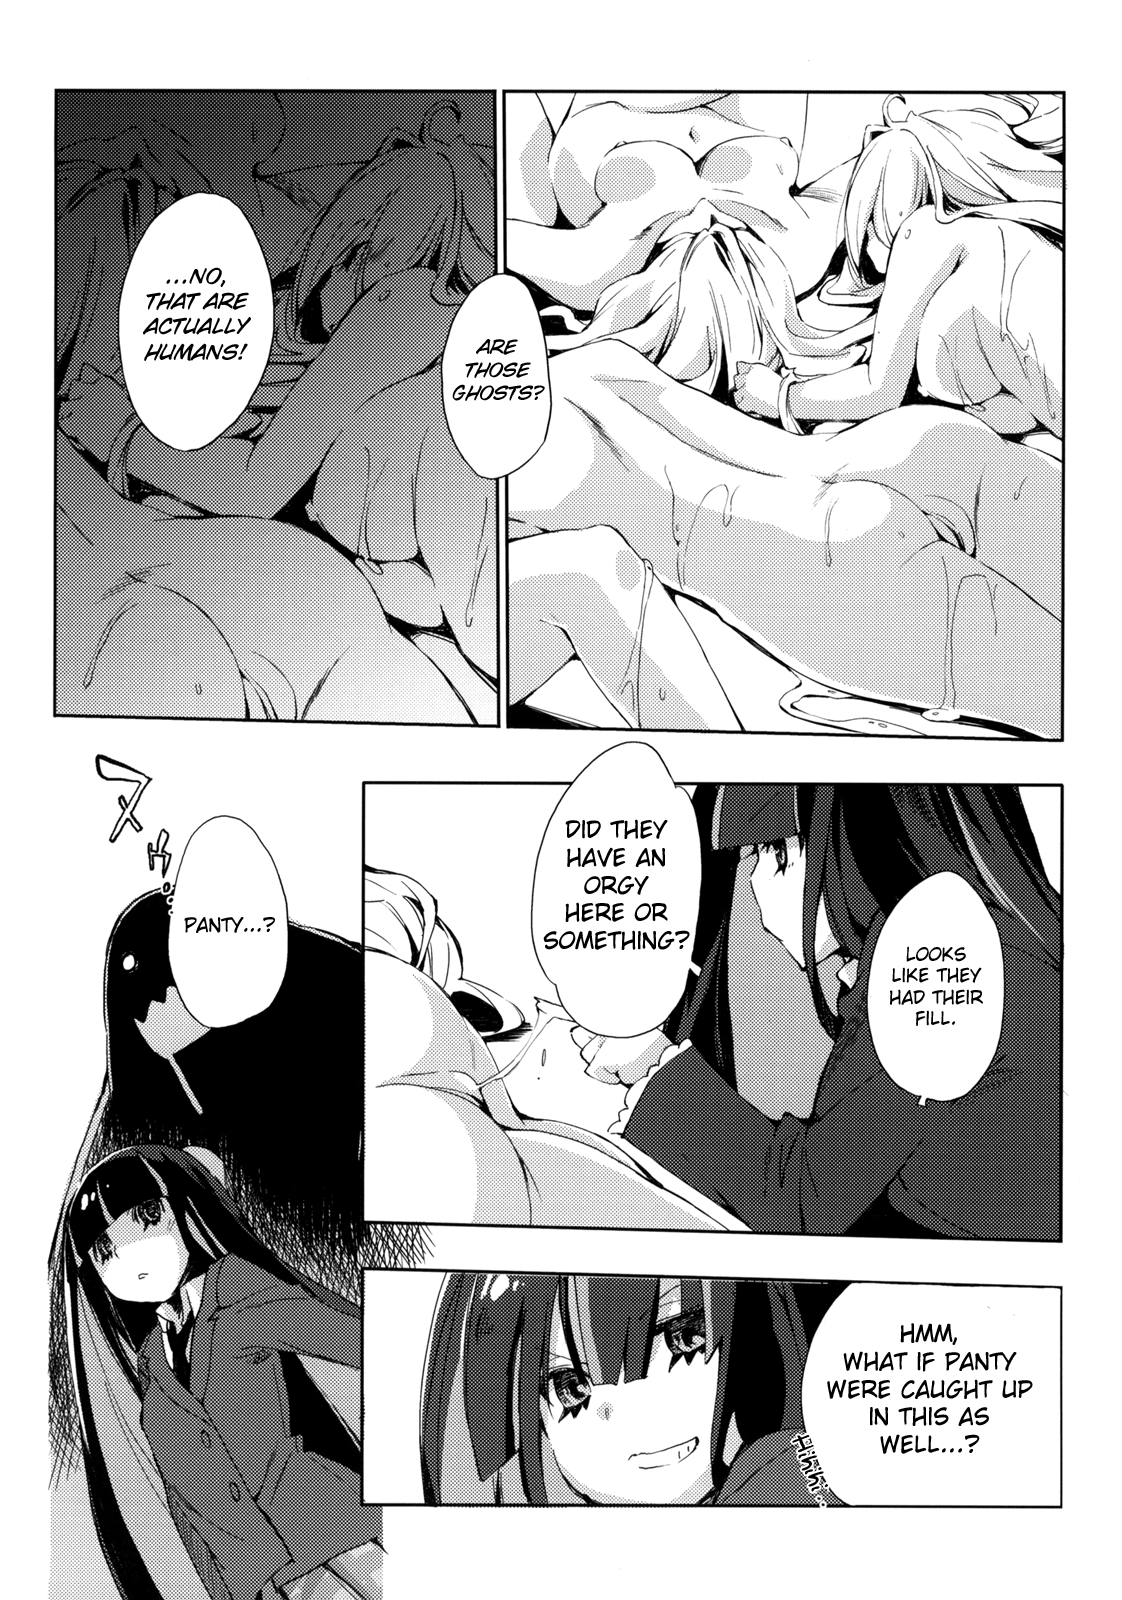 inmoral unmoral hentai manga picture 4